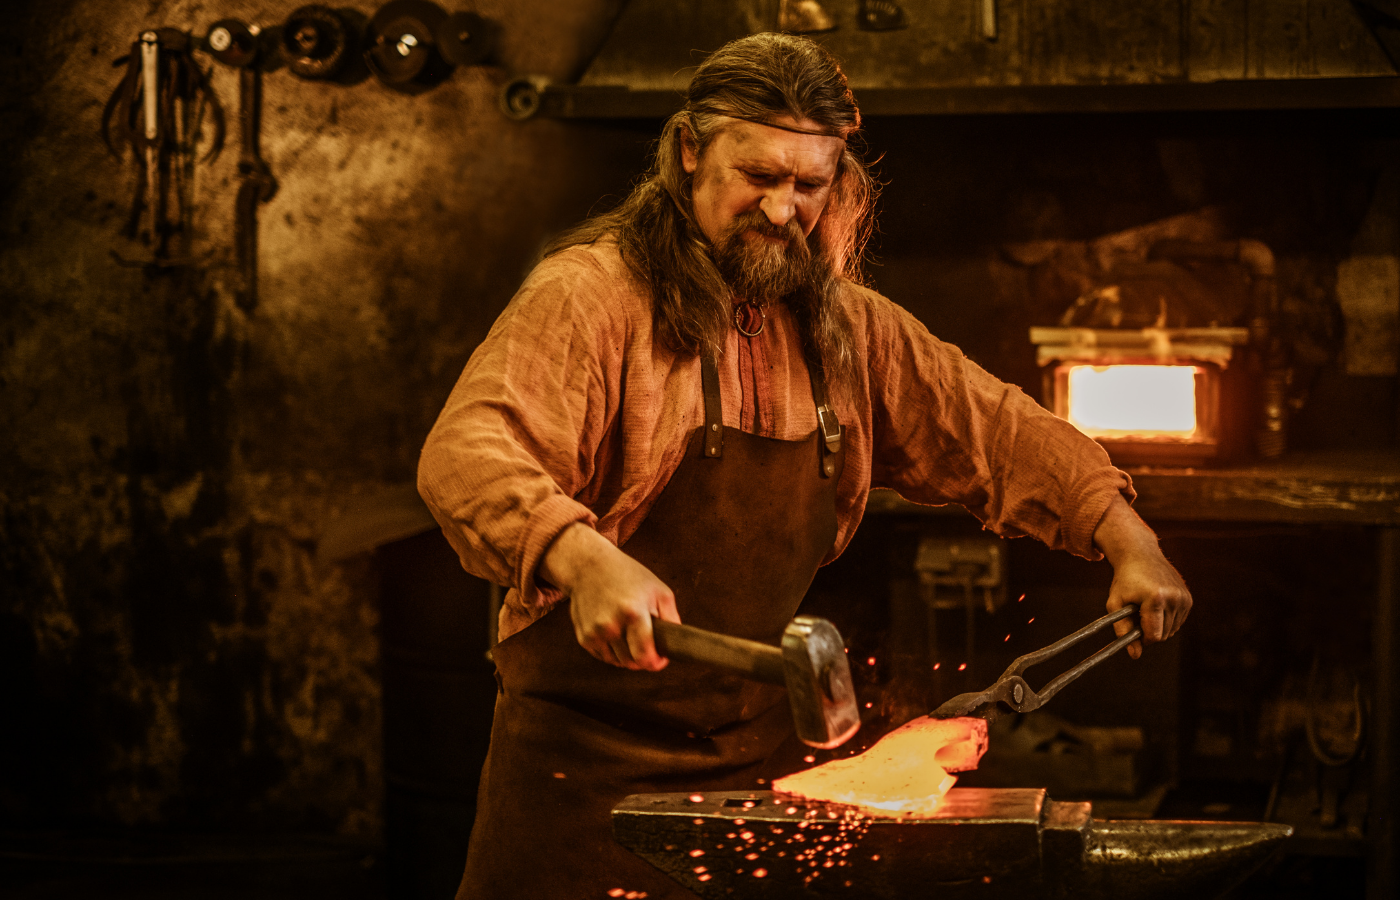 Blacksmith working on forging an ax